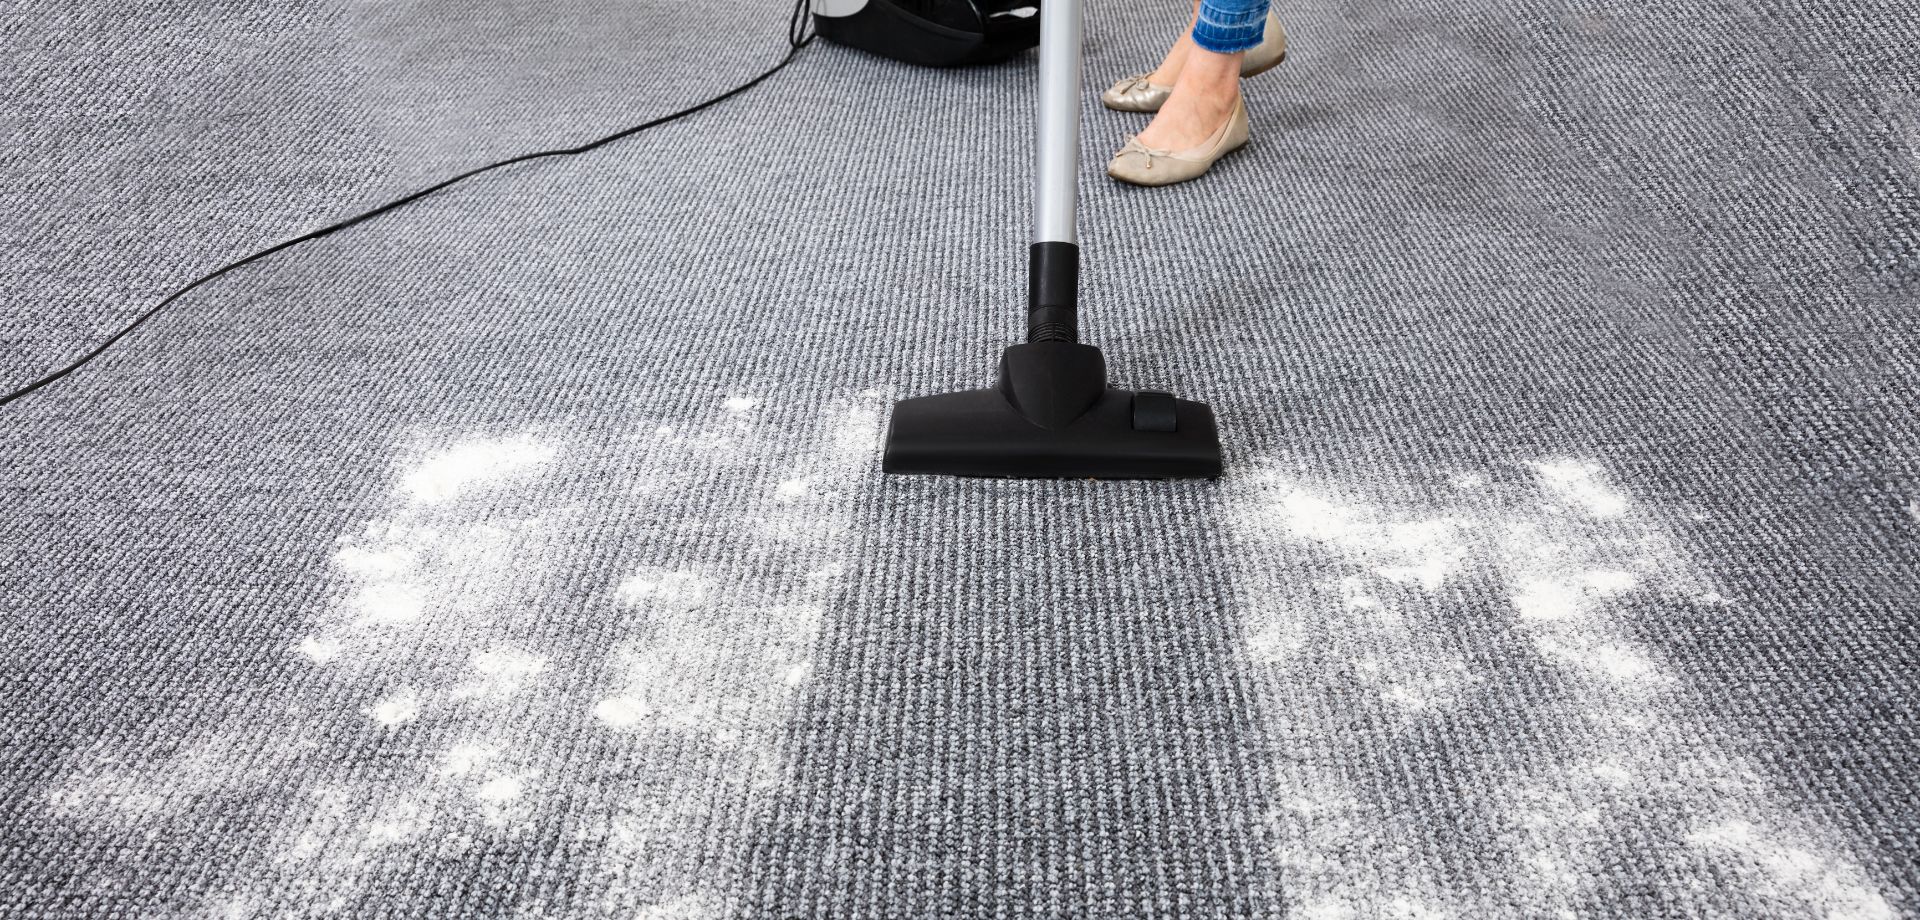 Thorough Vacuuming